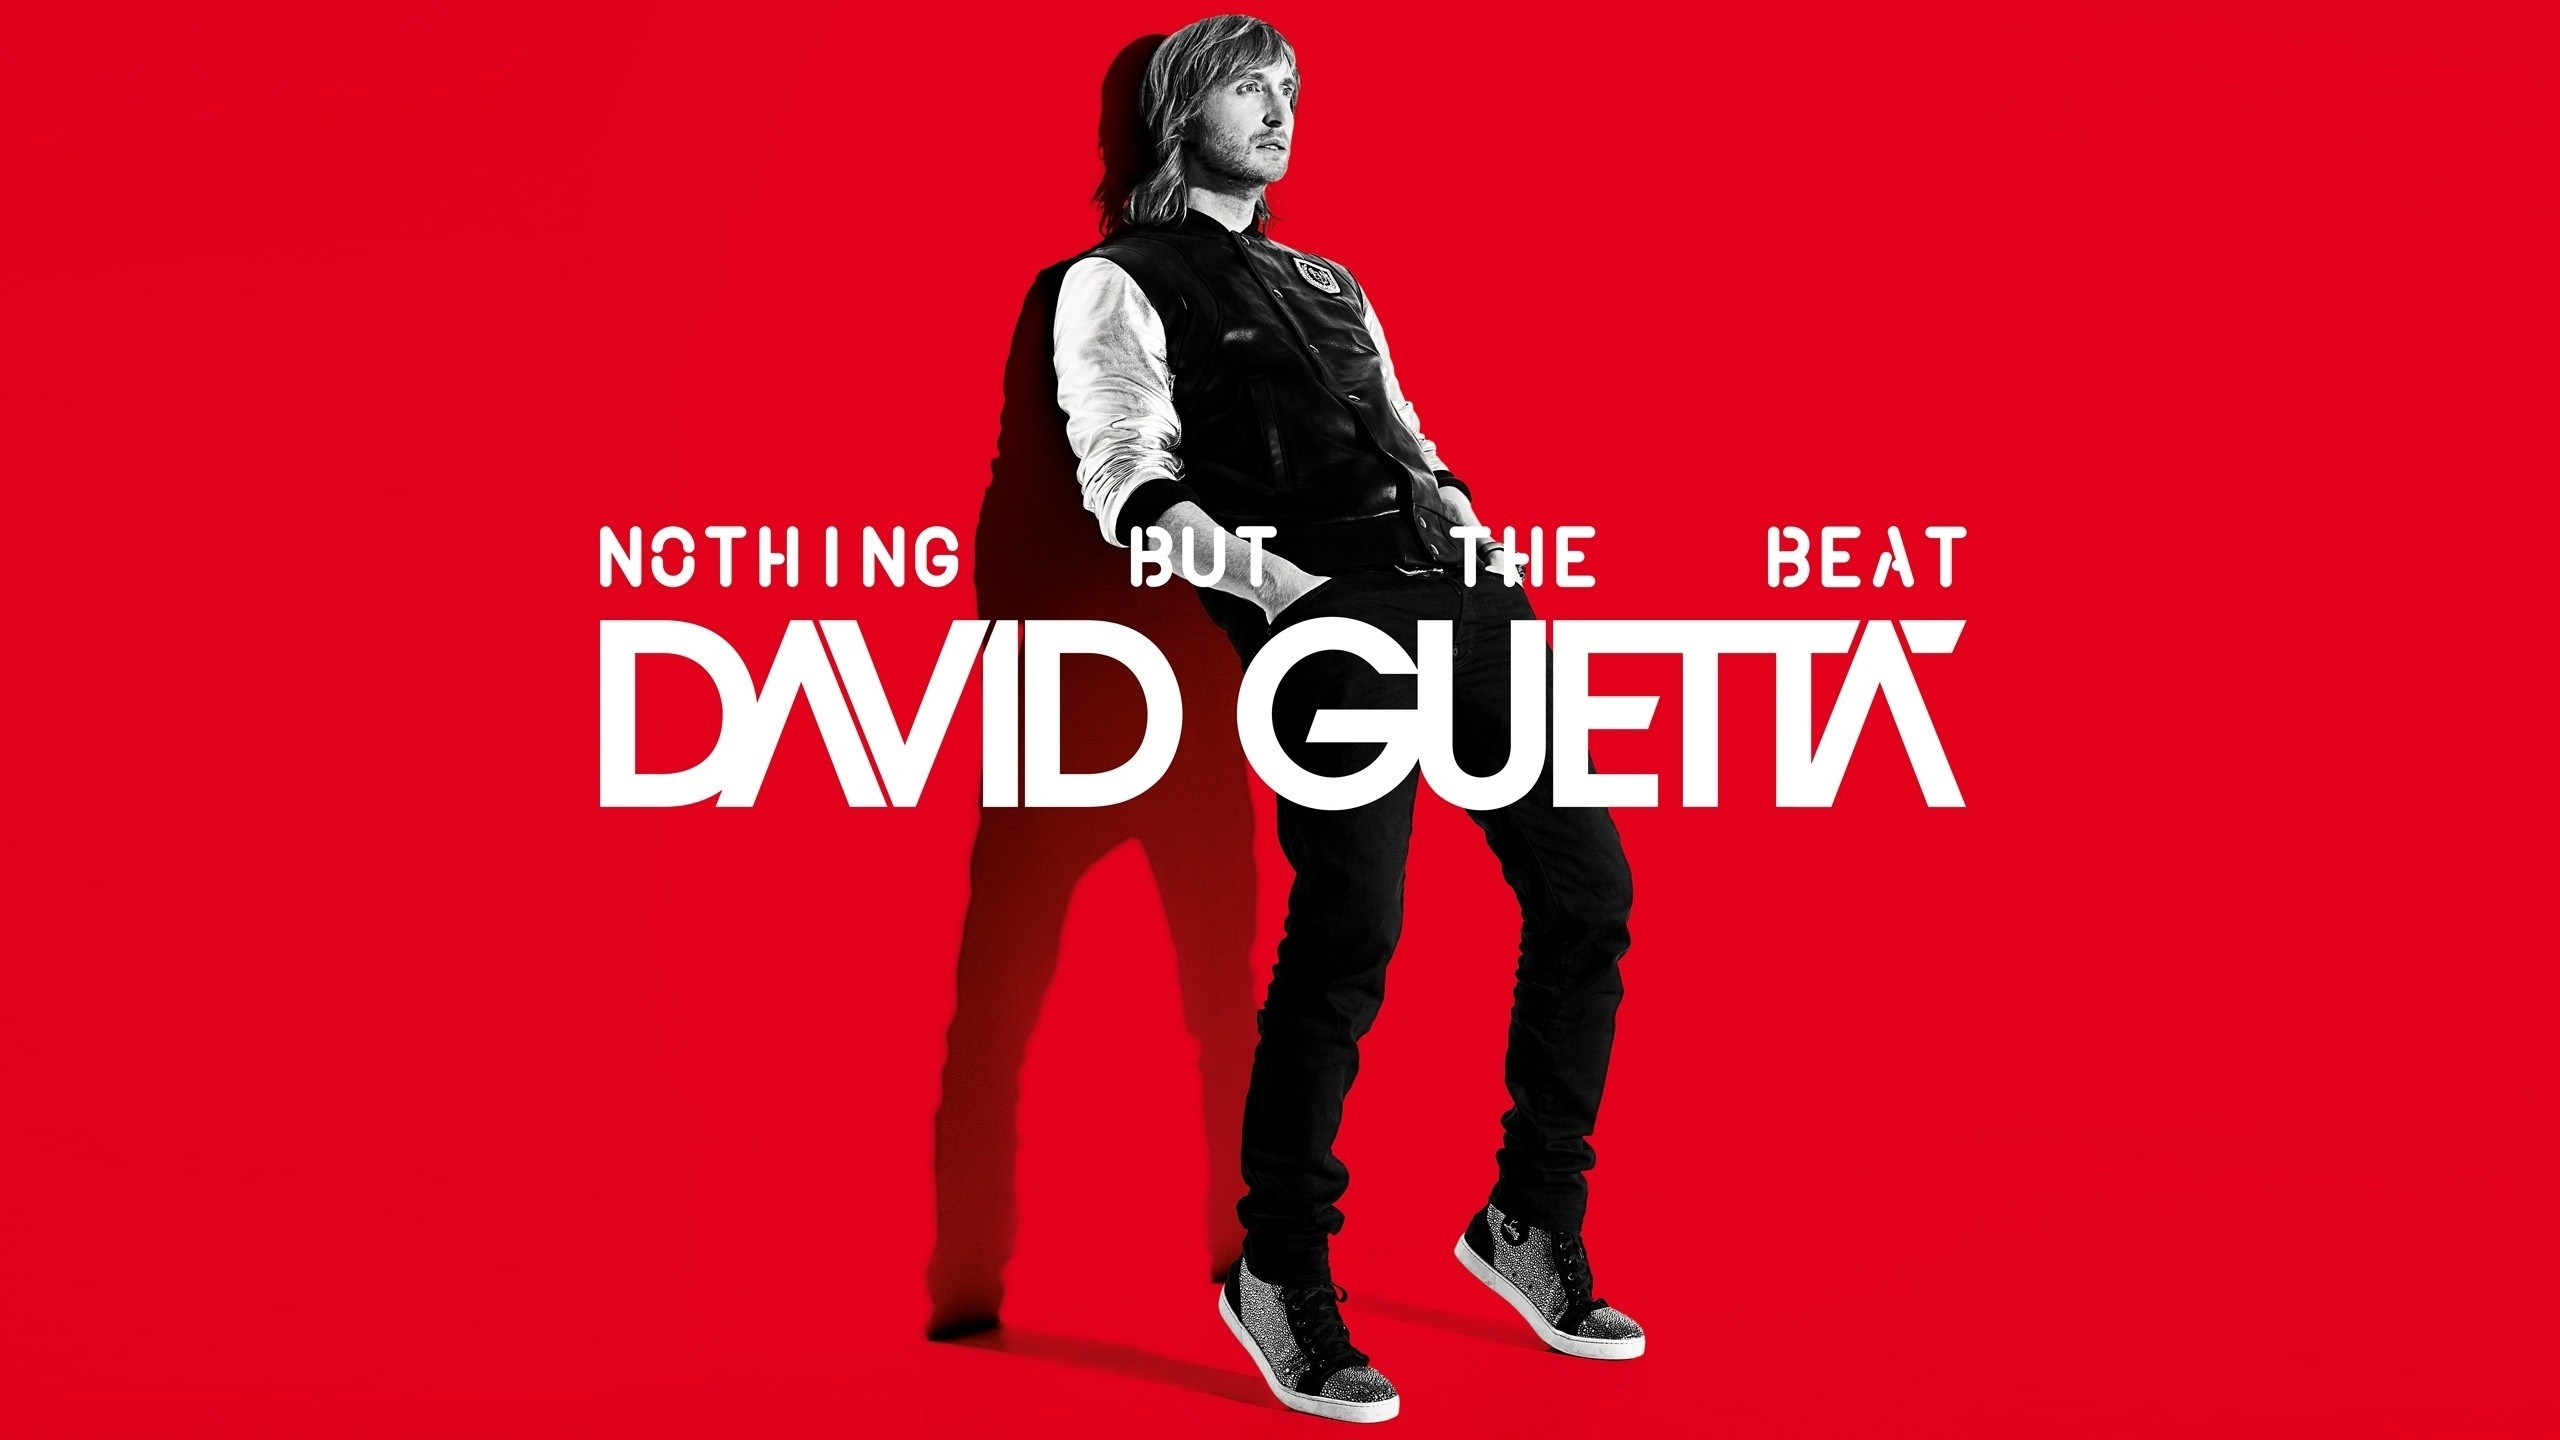 General 2560x1440 David Guetta men red background music simple background musician